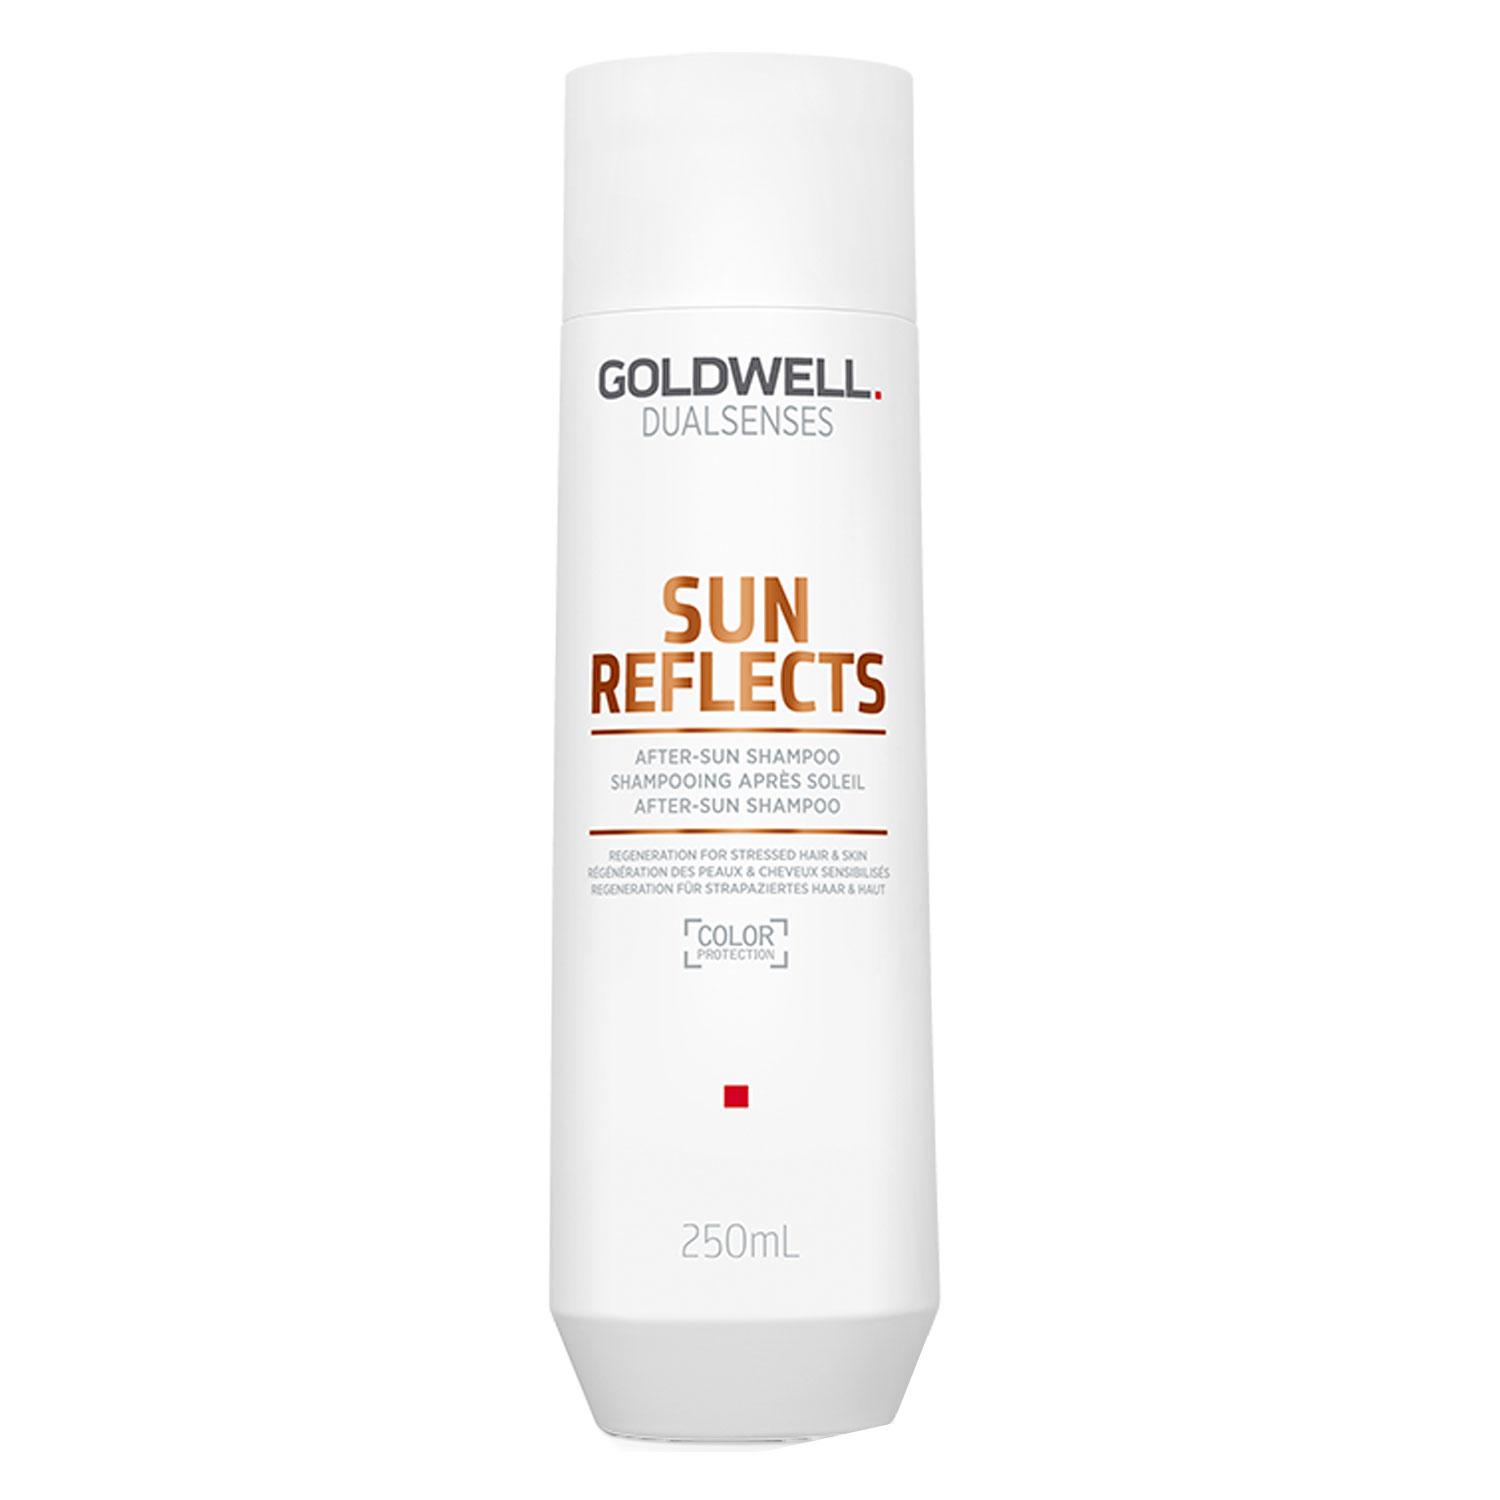 Dualsenses Sun Reflects - After-Sun Shampoo